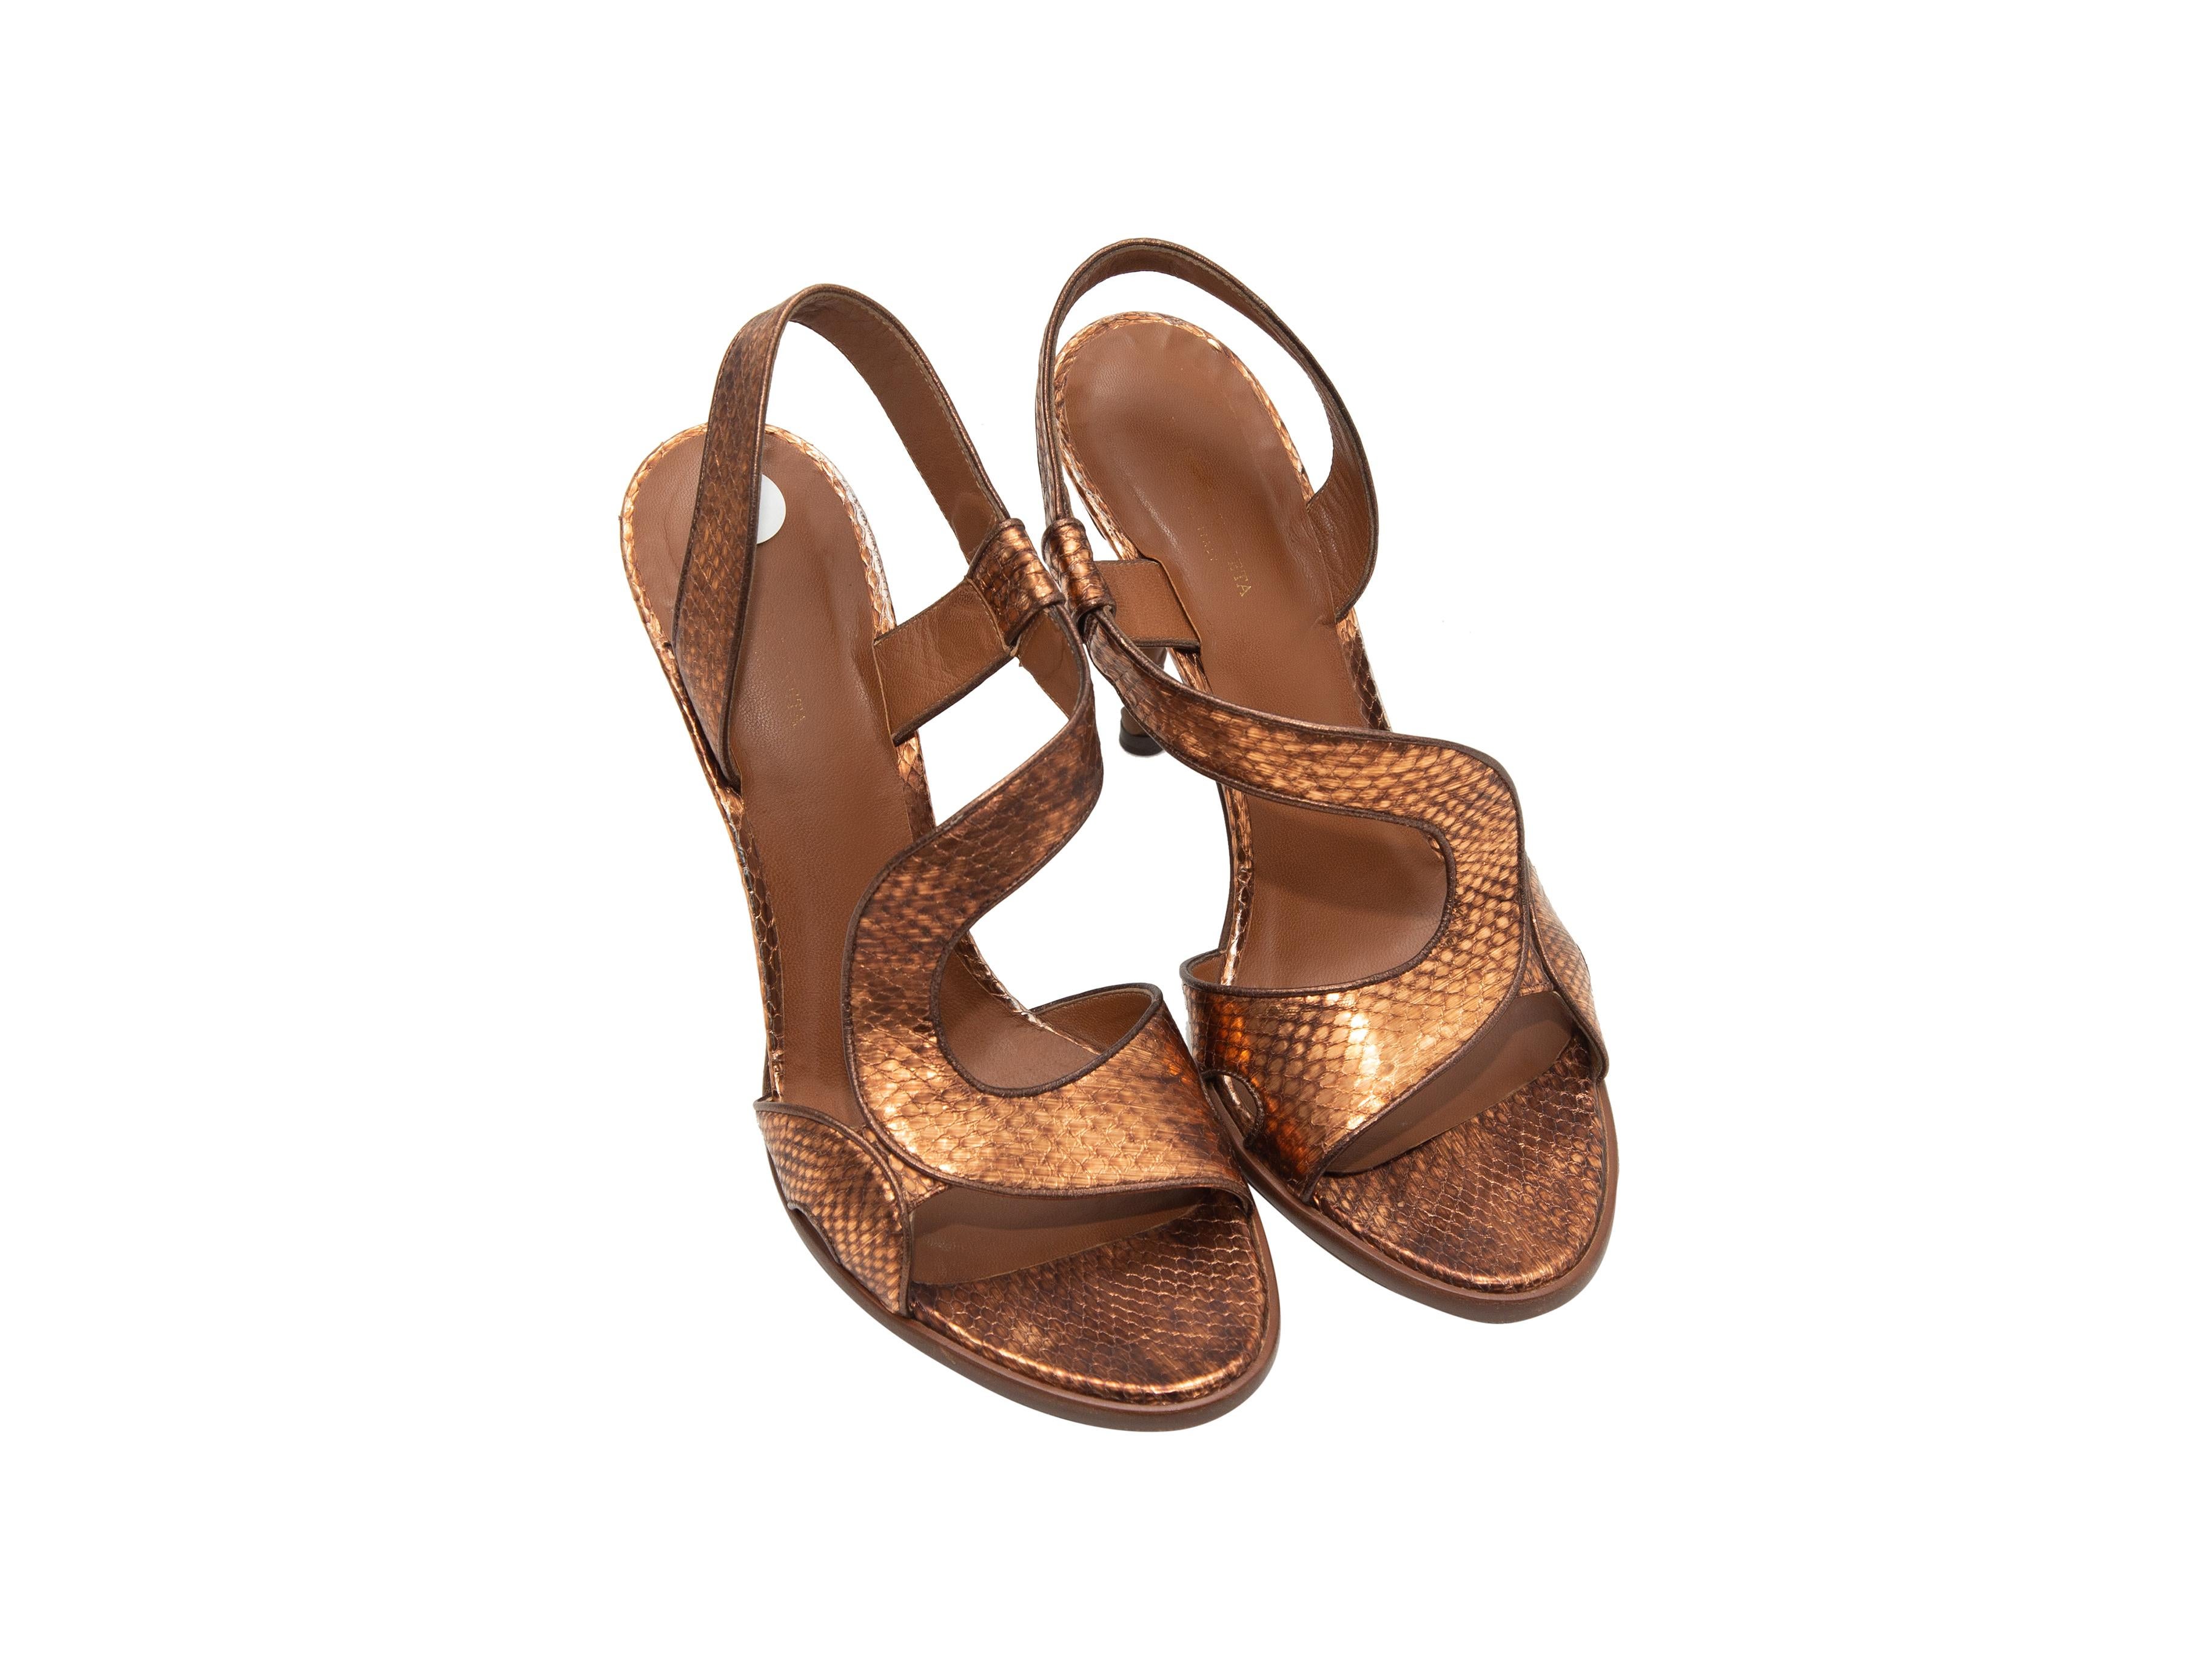 Product details: Bronze metallic embossed leather heeled sandals by Bottega Veneta. Brown Intrecciato leather heels. Designer size 39. 4.5